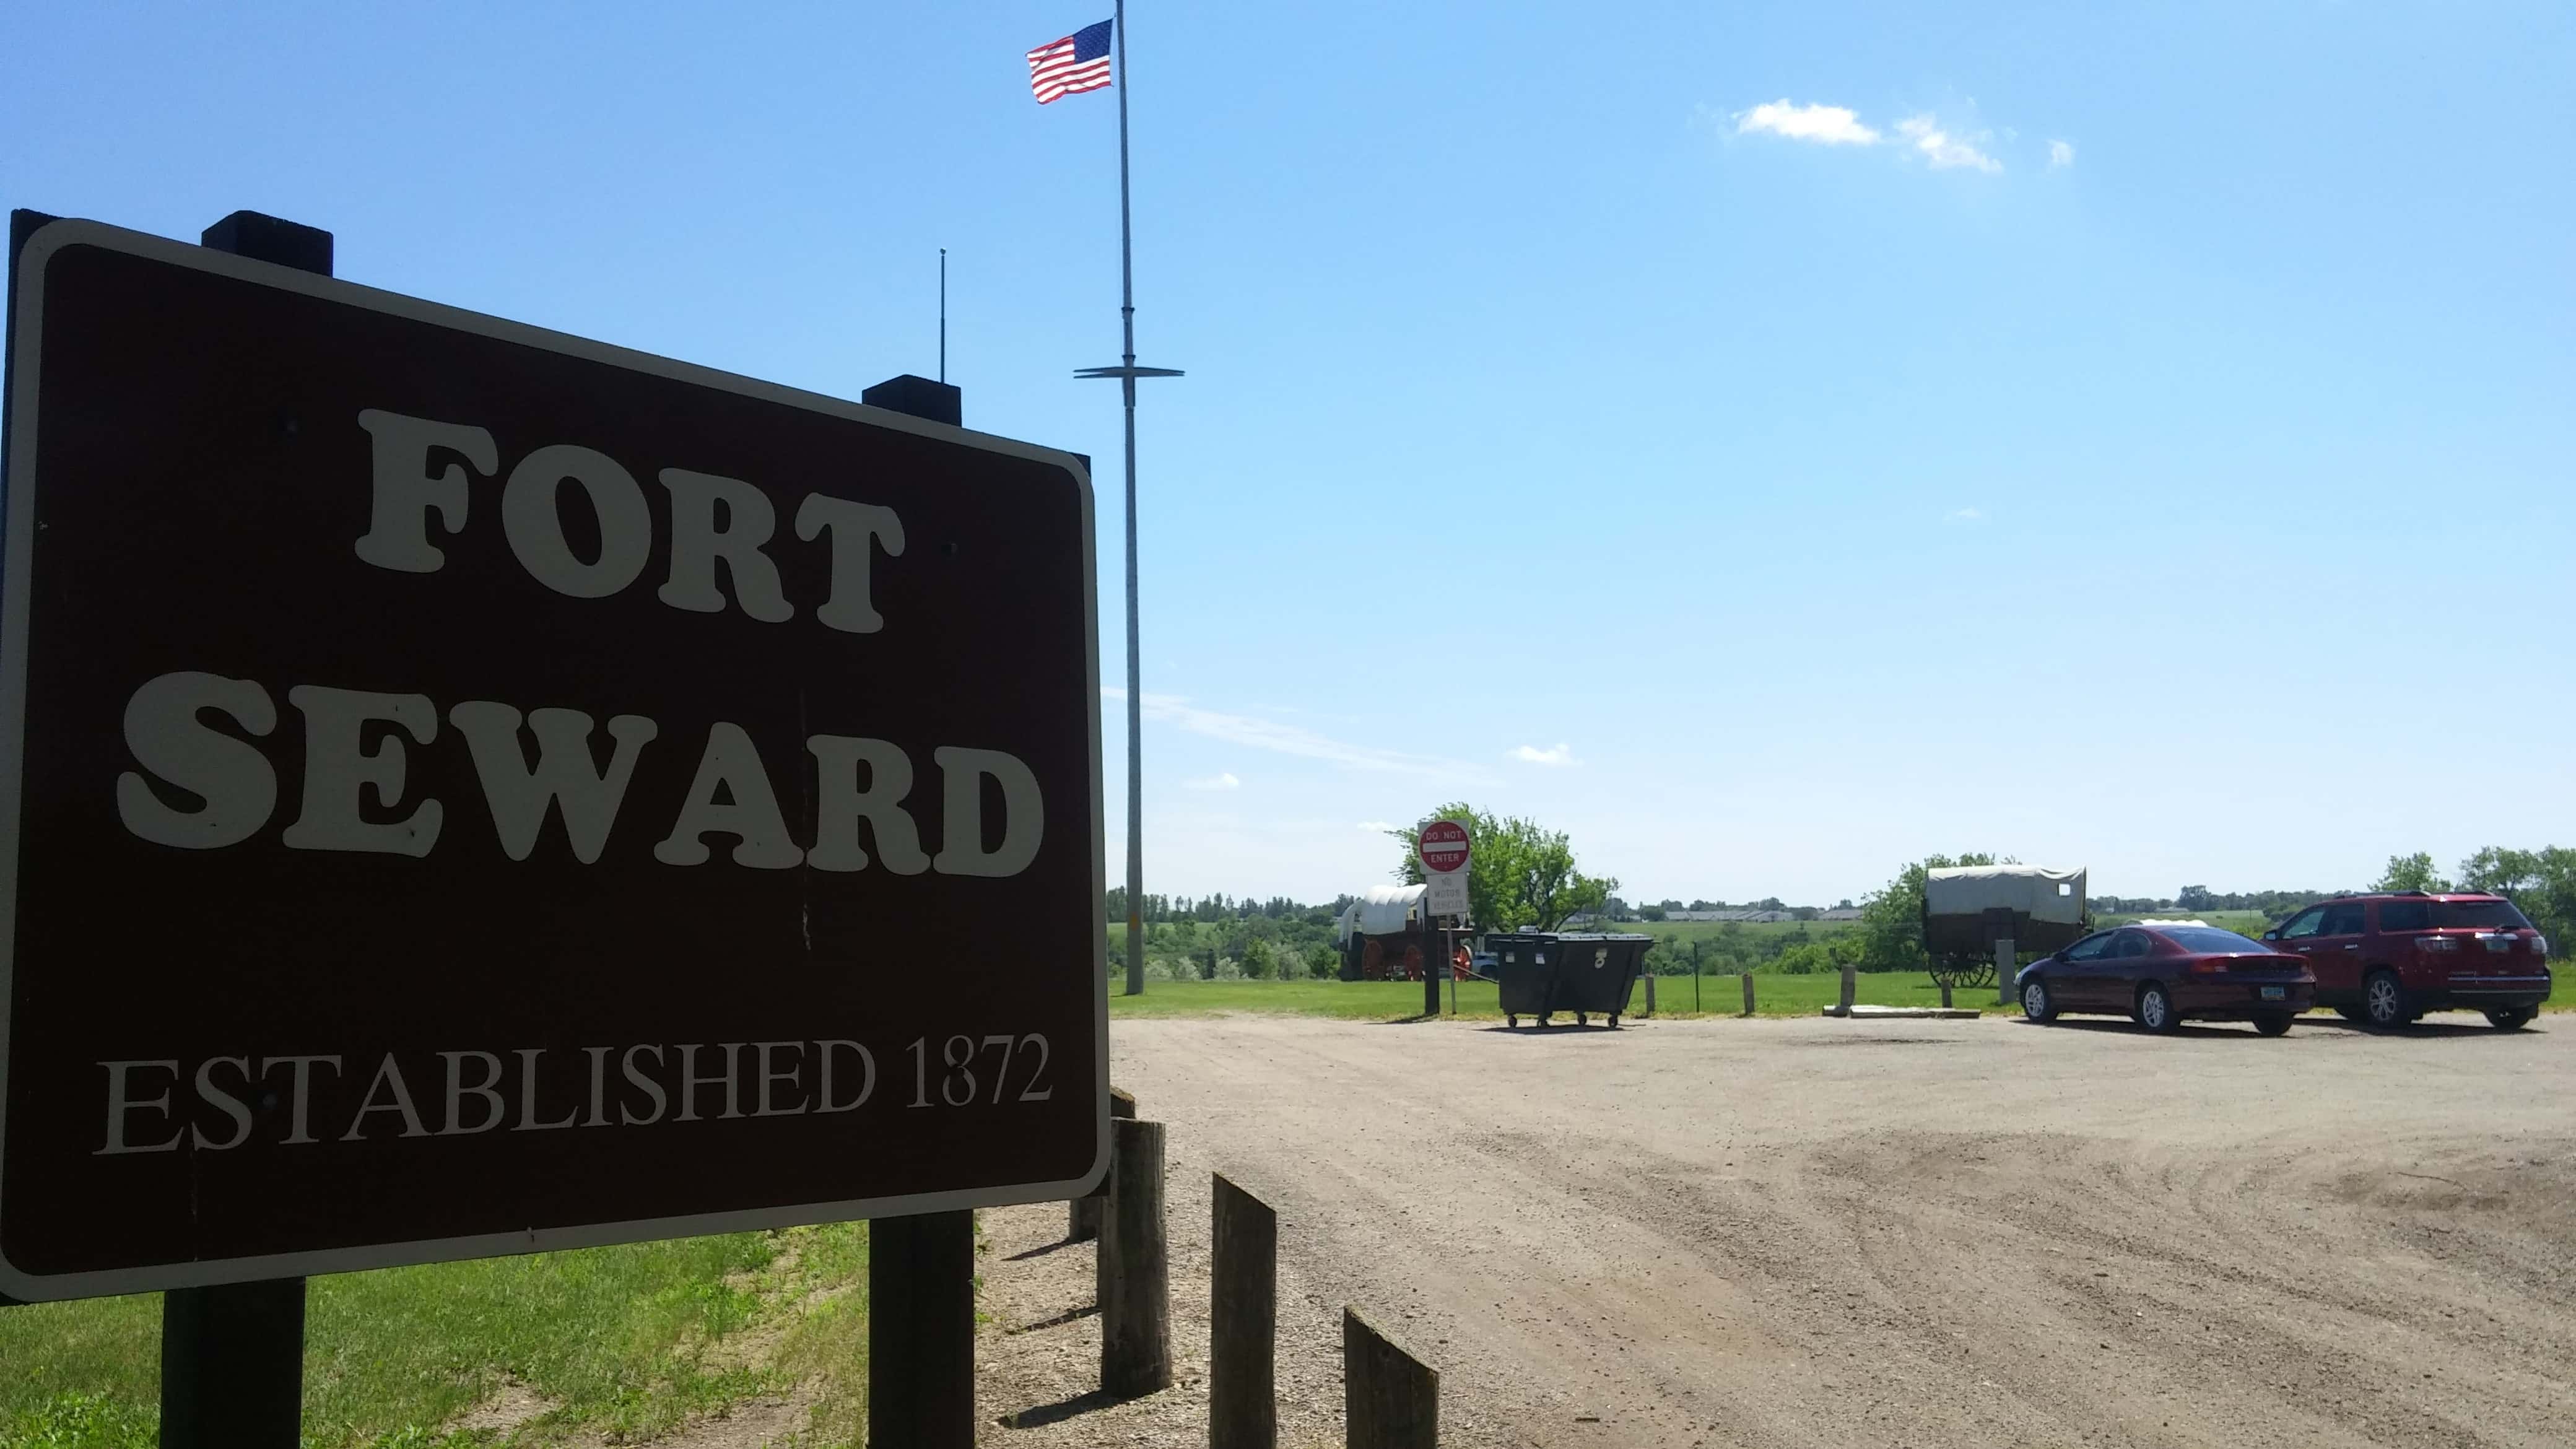 Fort Seward Providing Summer Activities Camping Experience